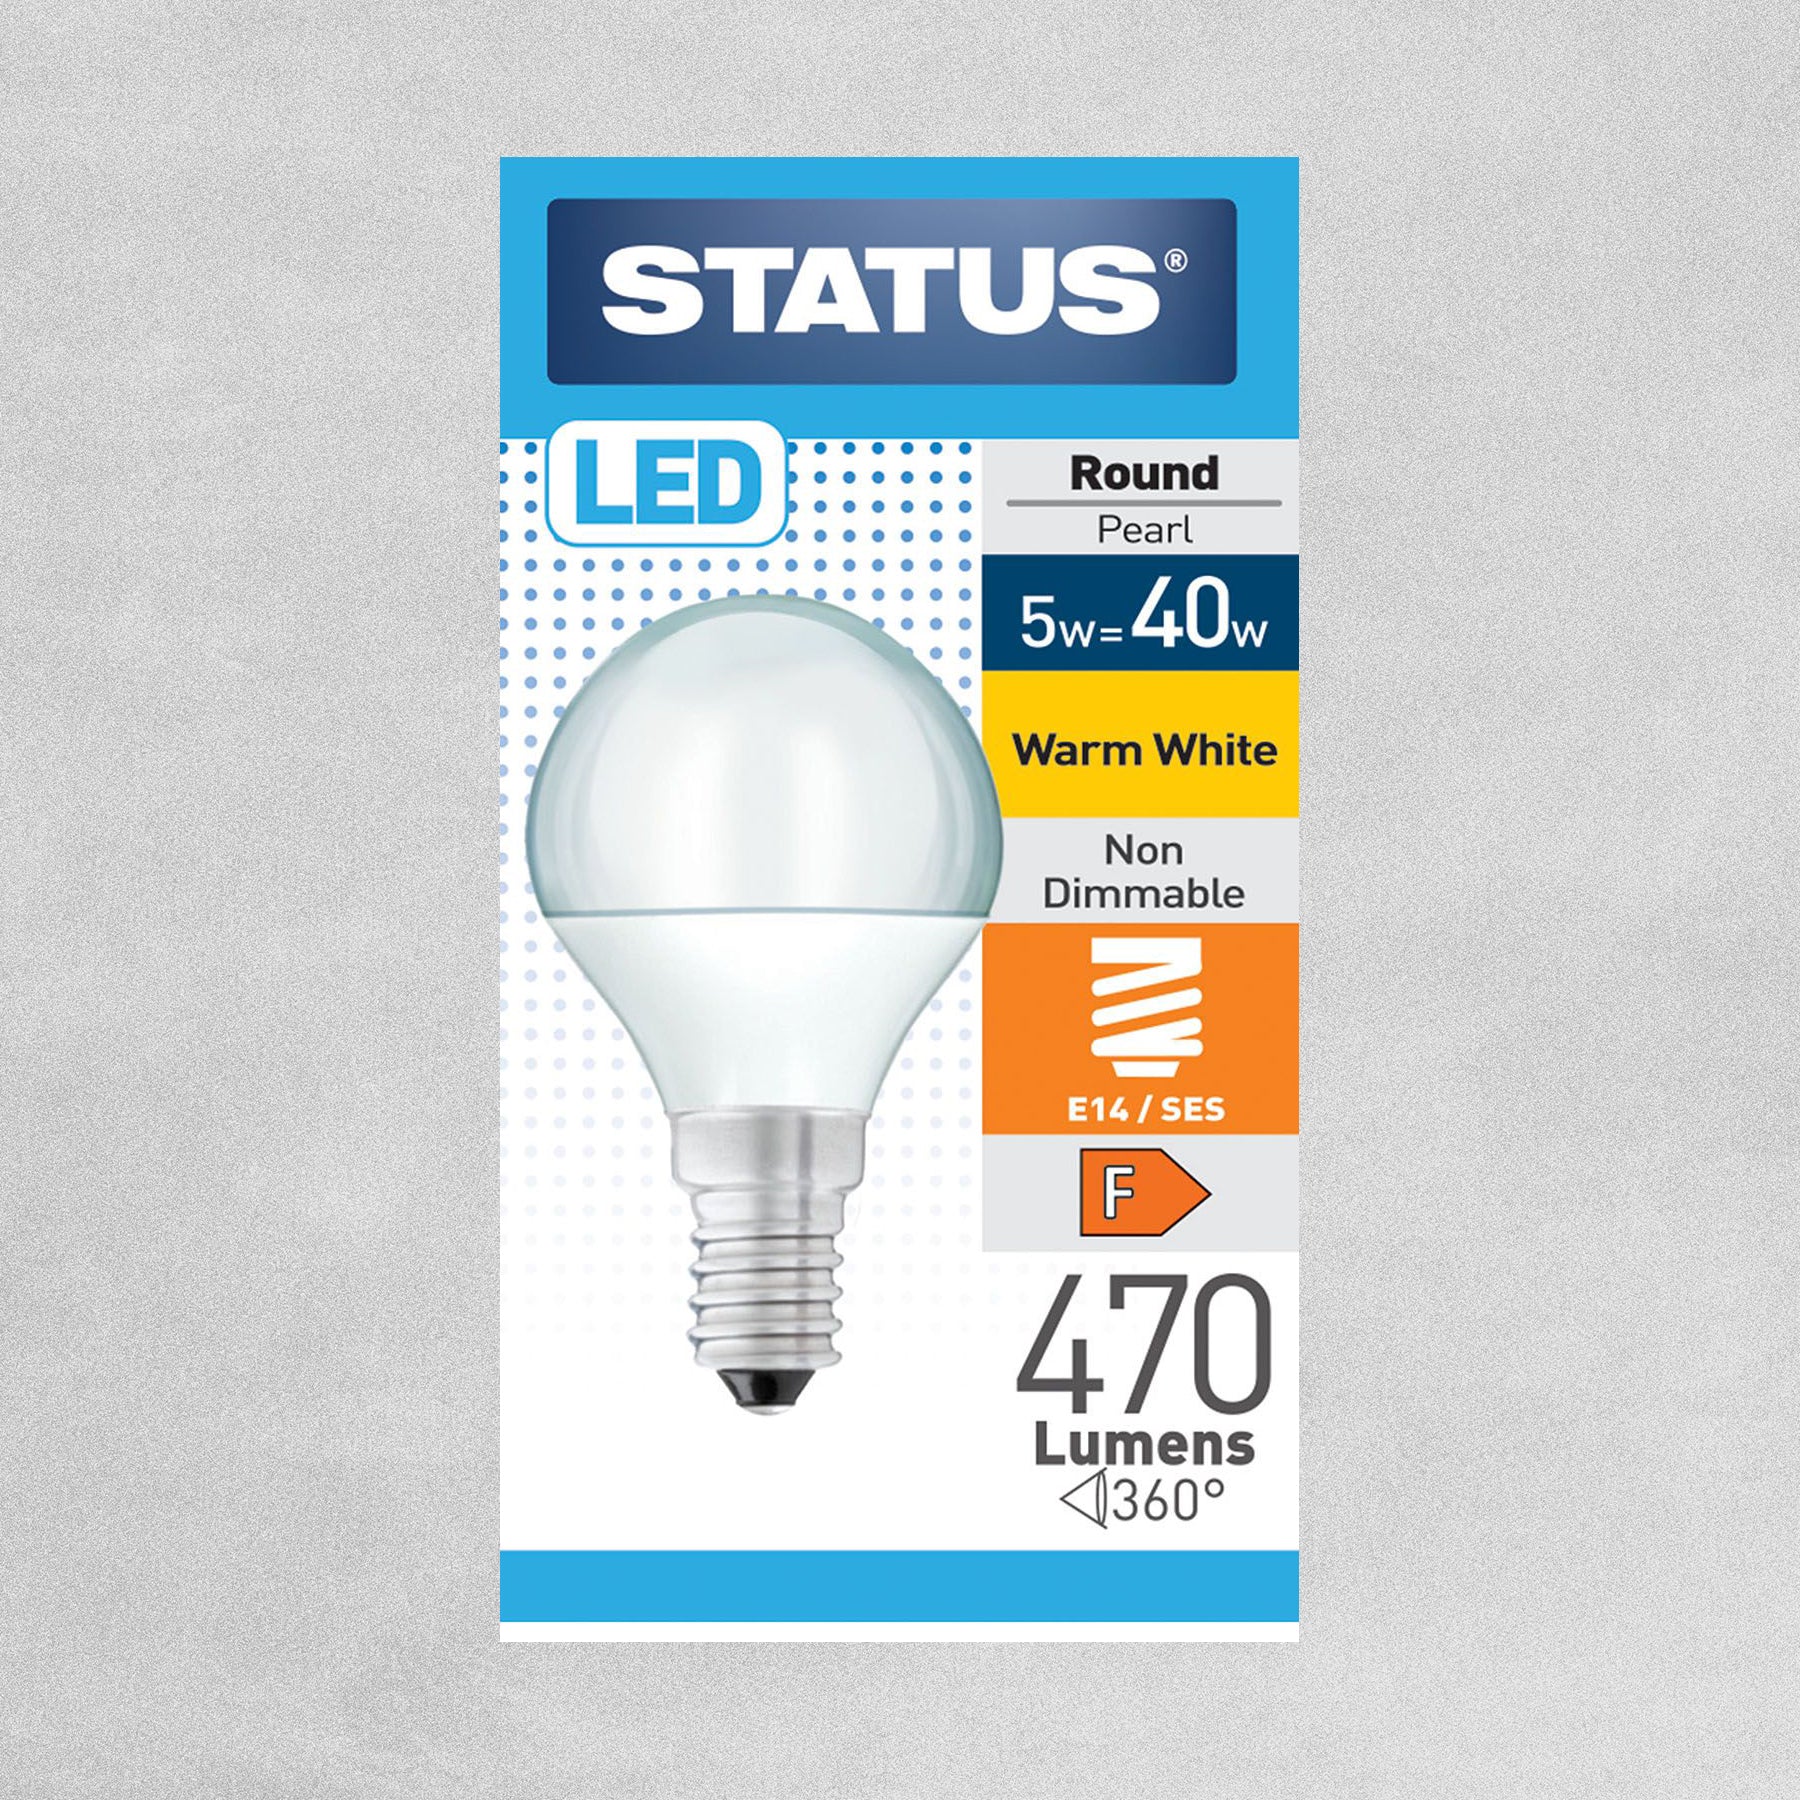 Status LED Round Pearl Bulb E14/SES 5w=40w - Warm White